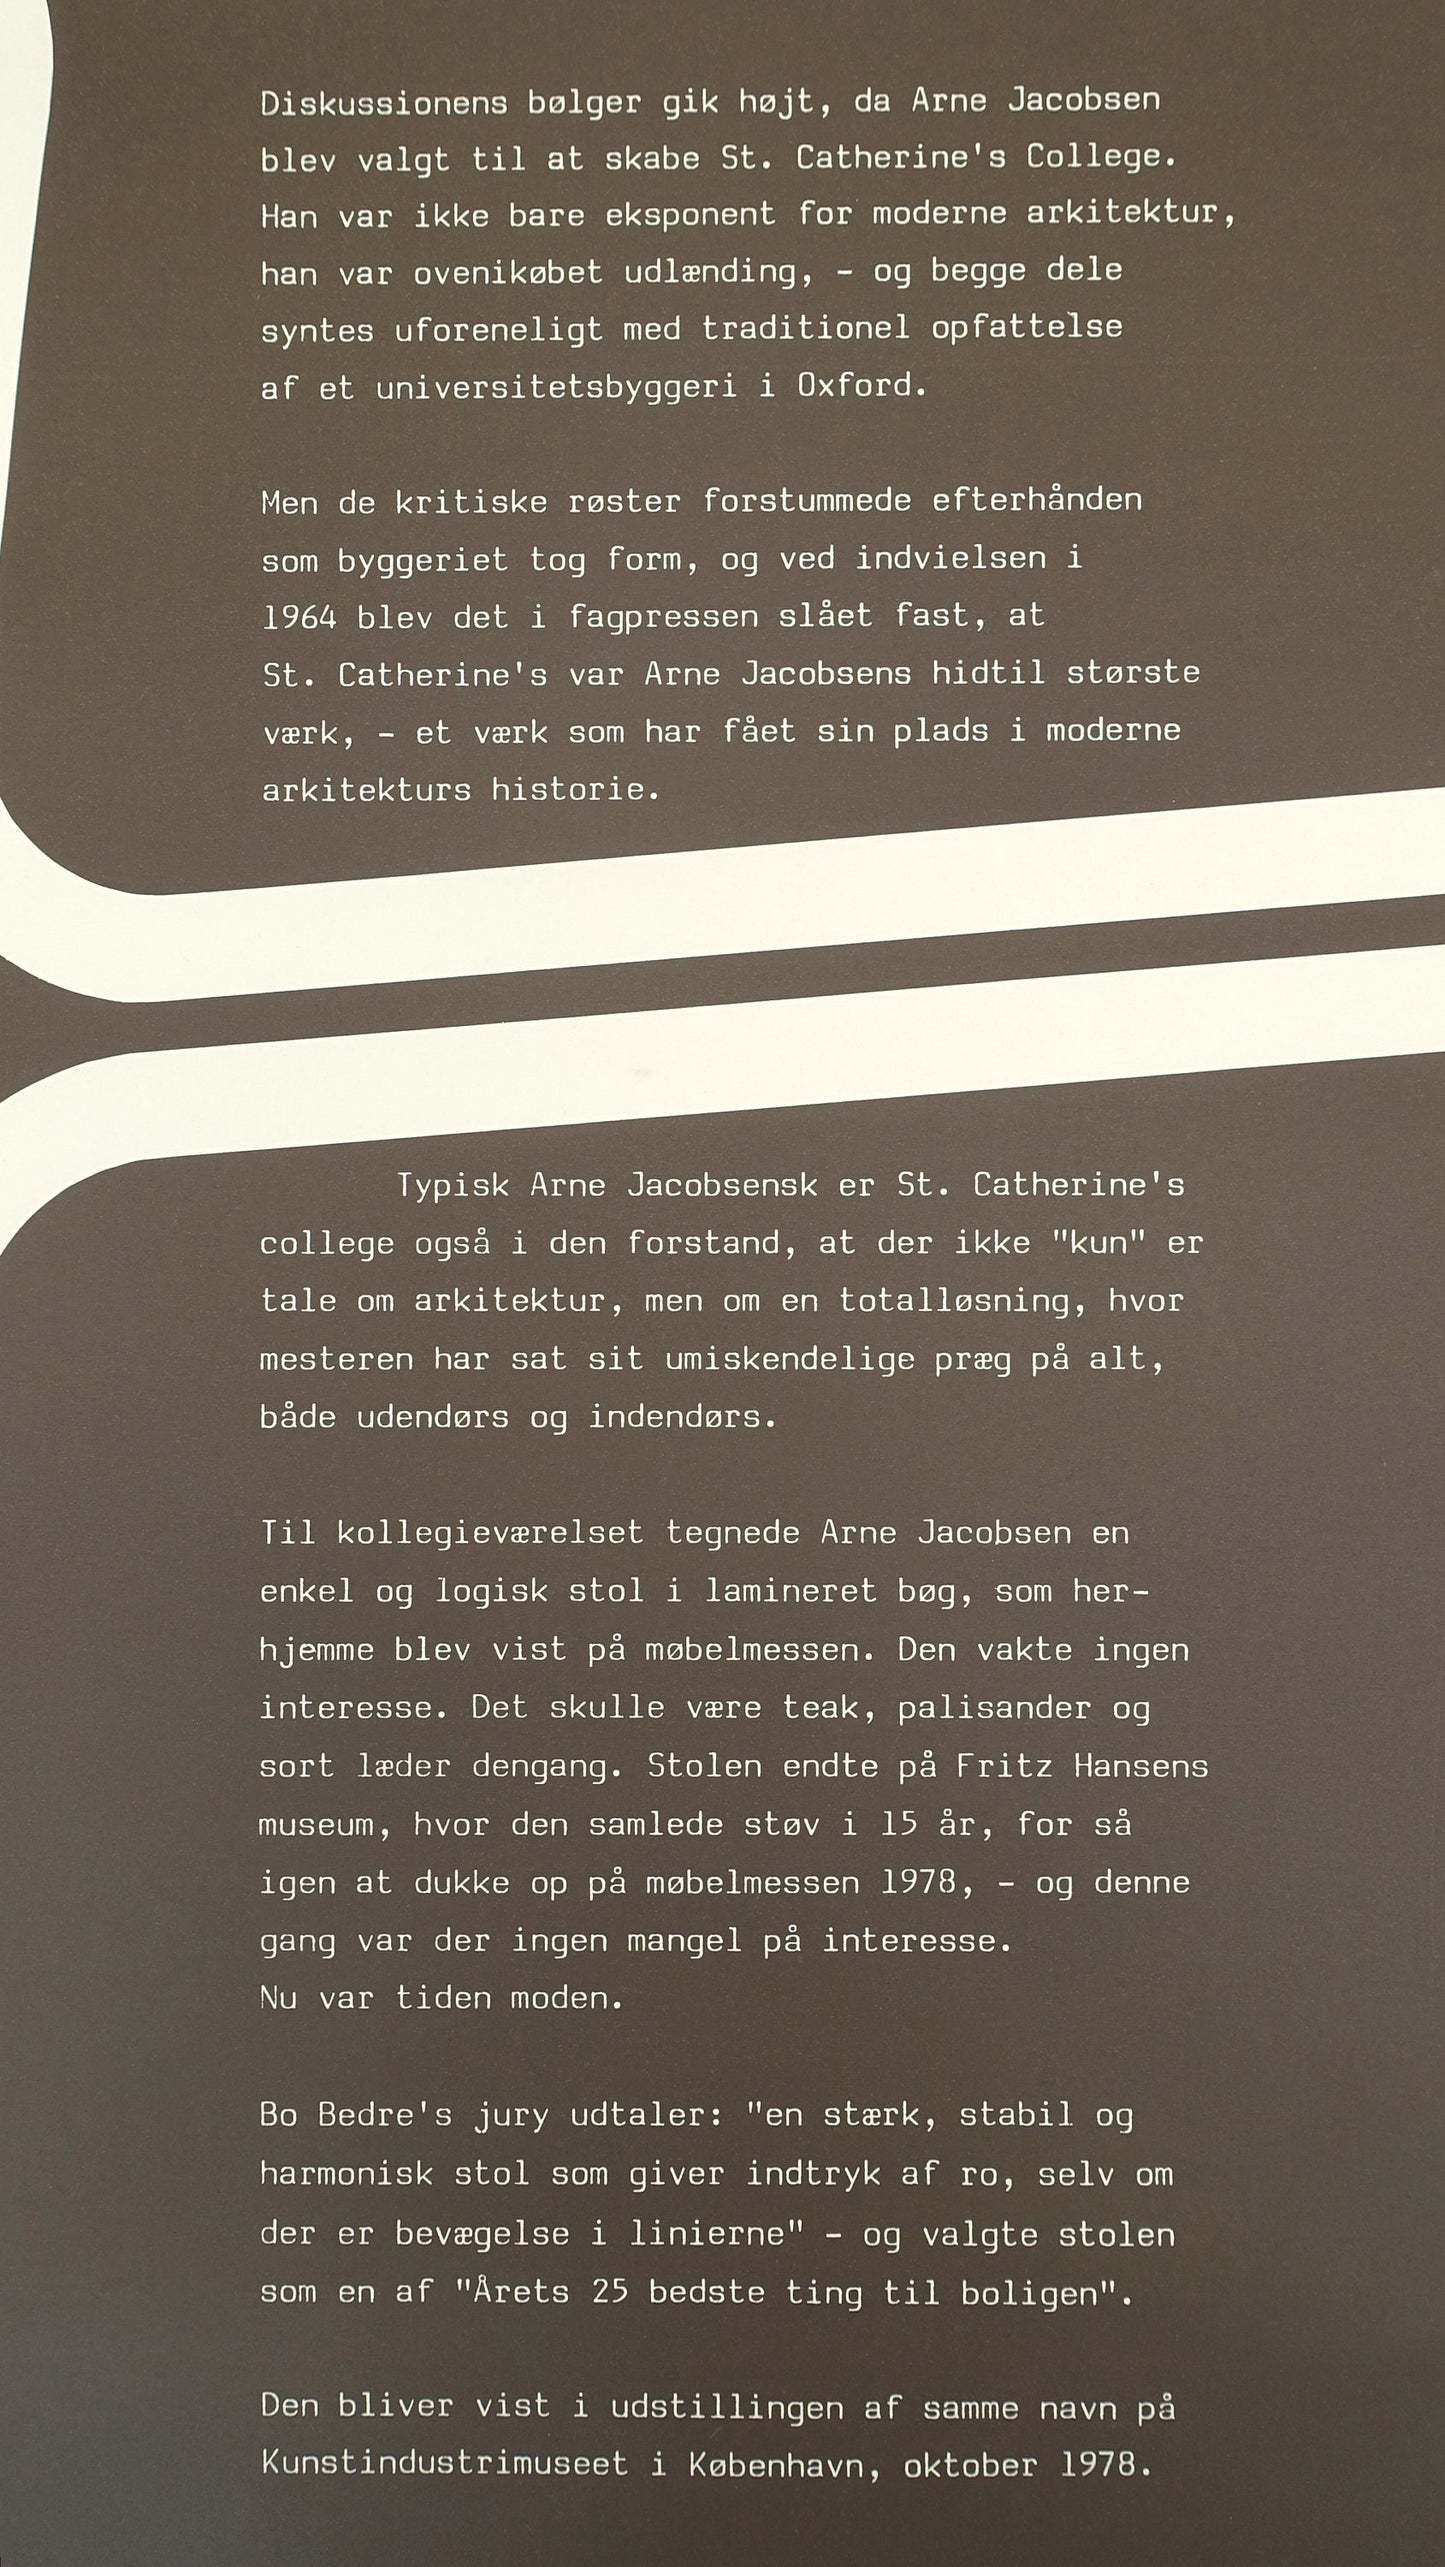 1978 Arne Jacobsen Design Exhibition - Original Vintage Poster